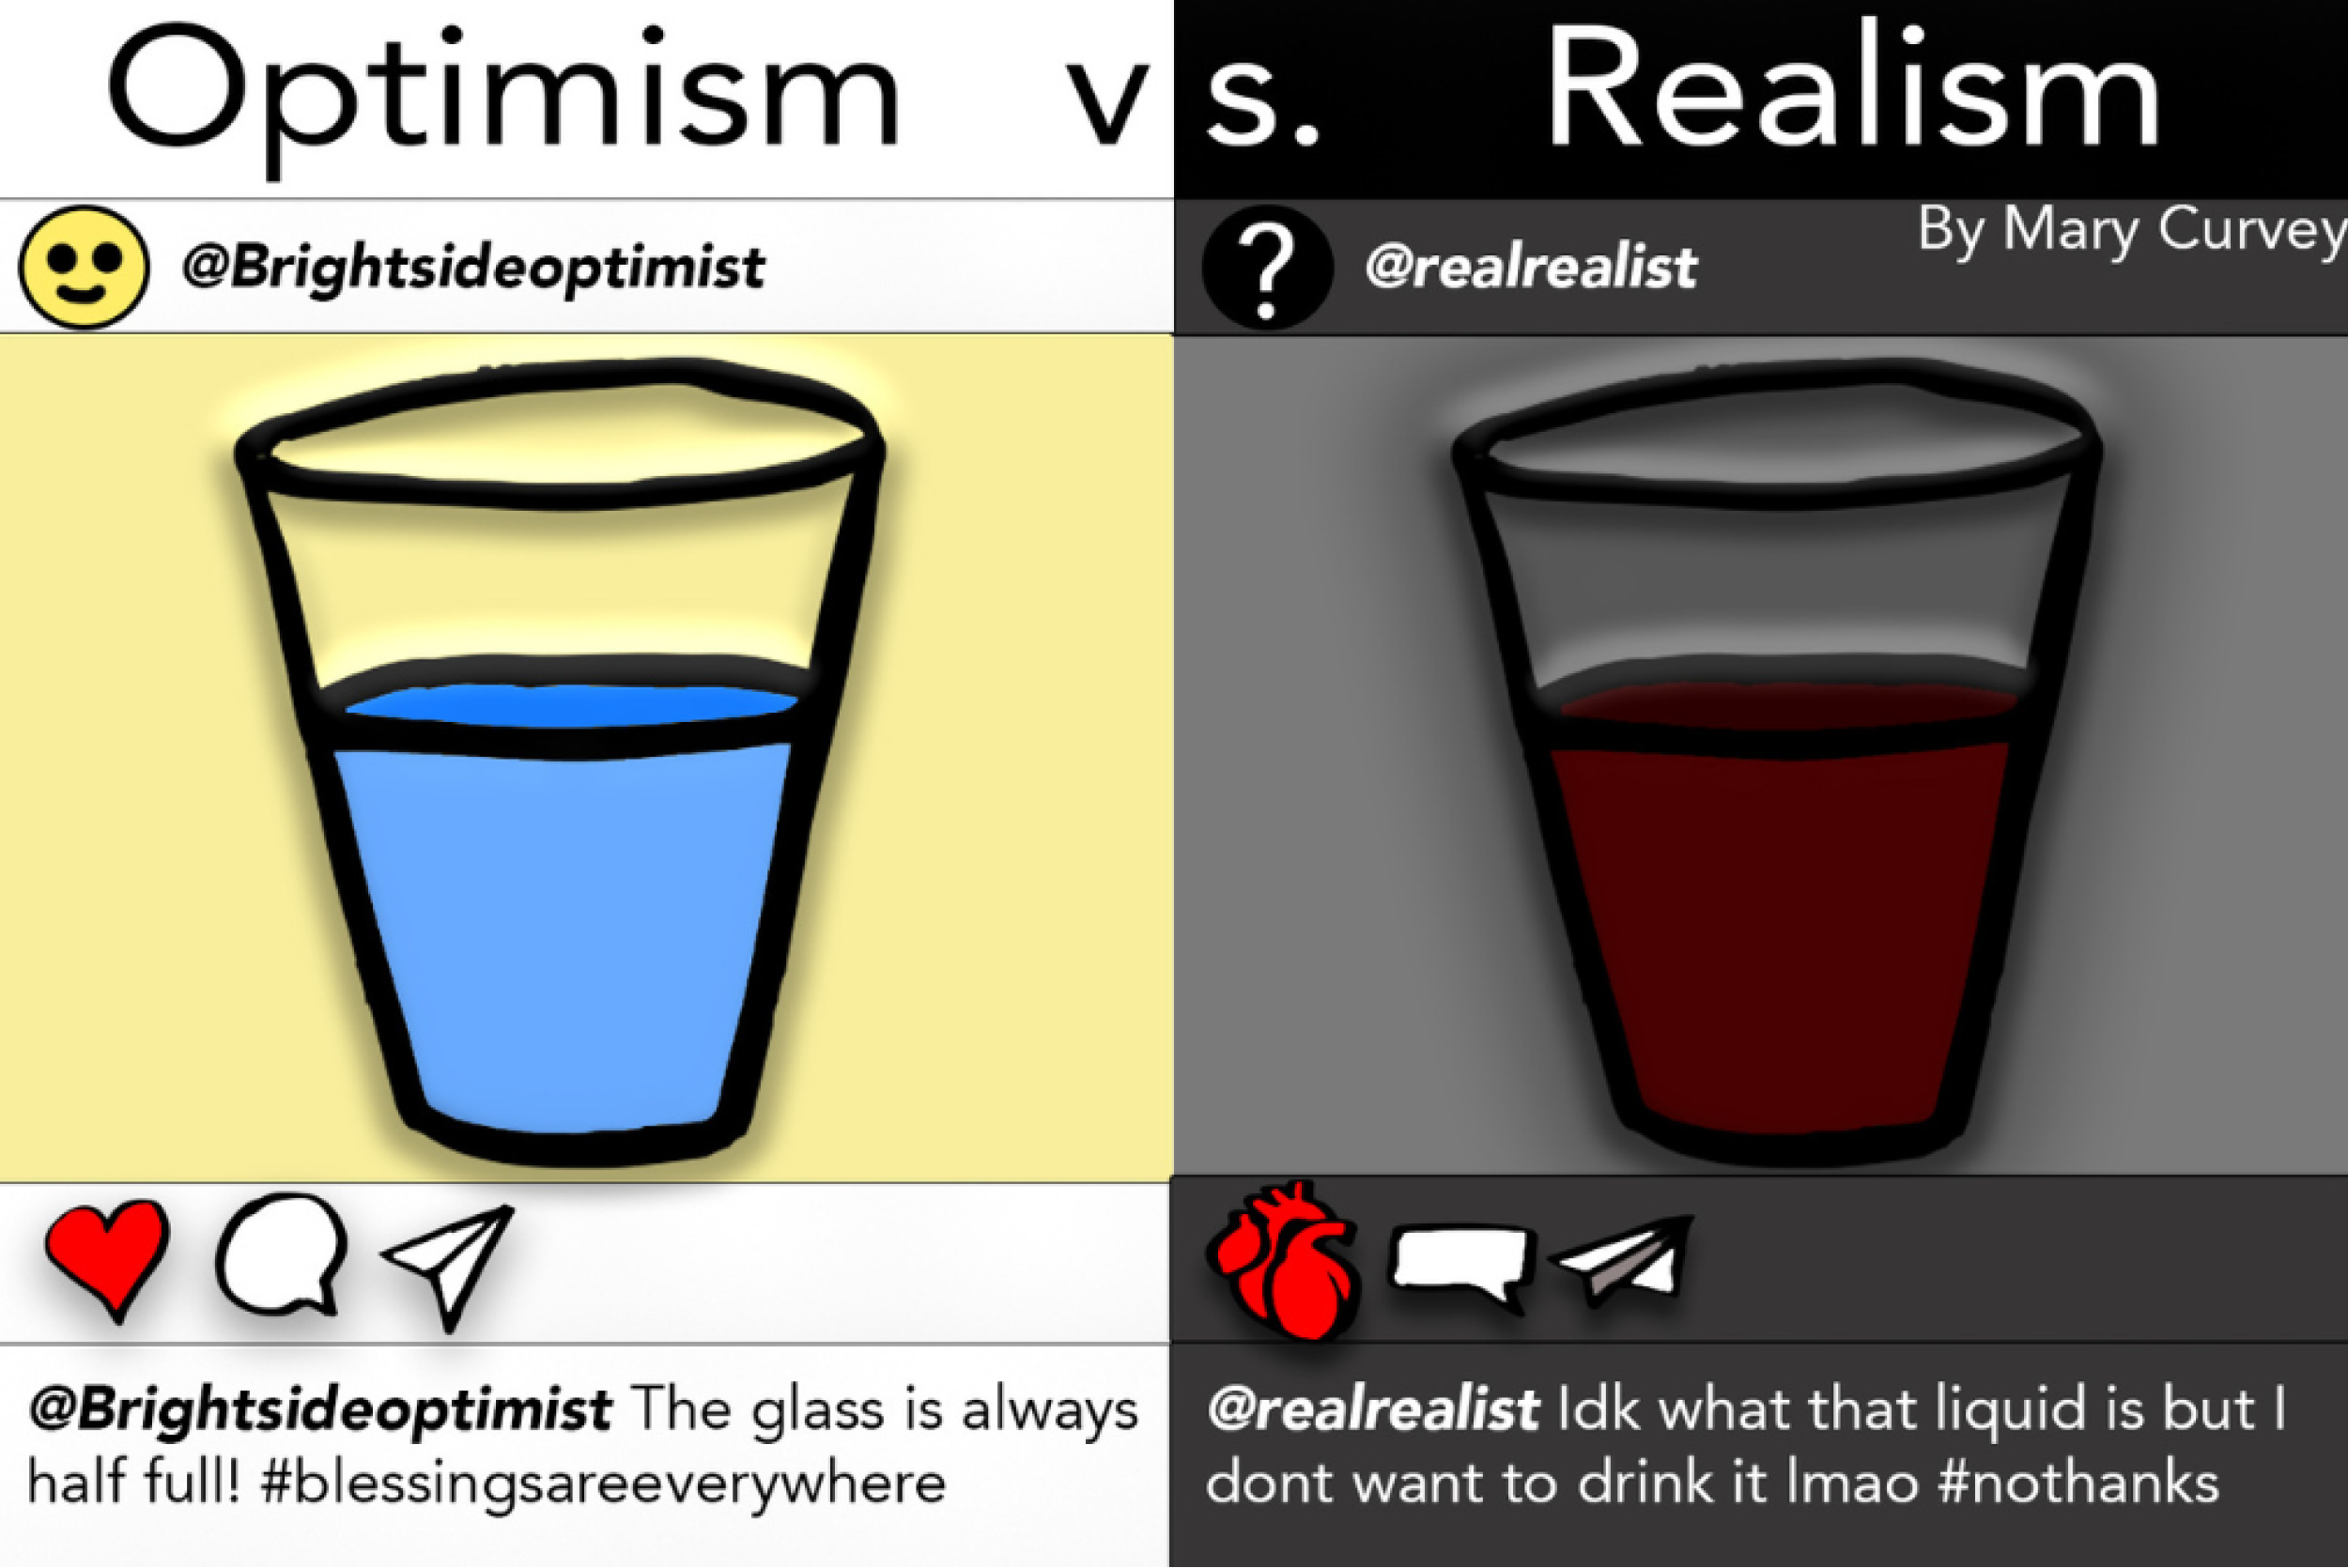 cartoon depicting a glass half full of water versus a red liquid